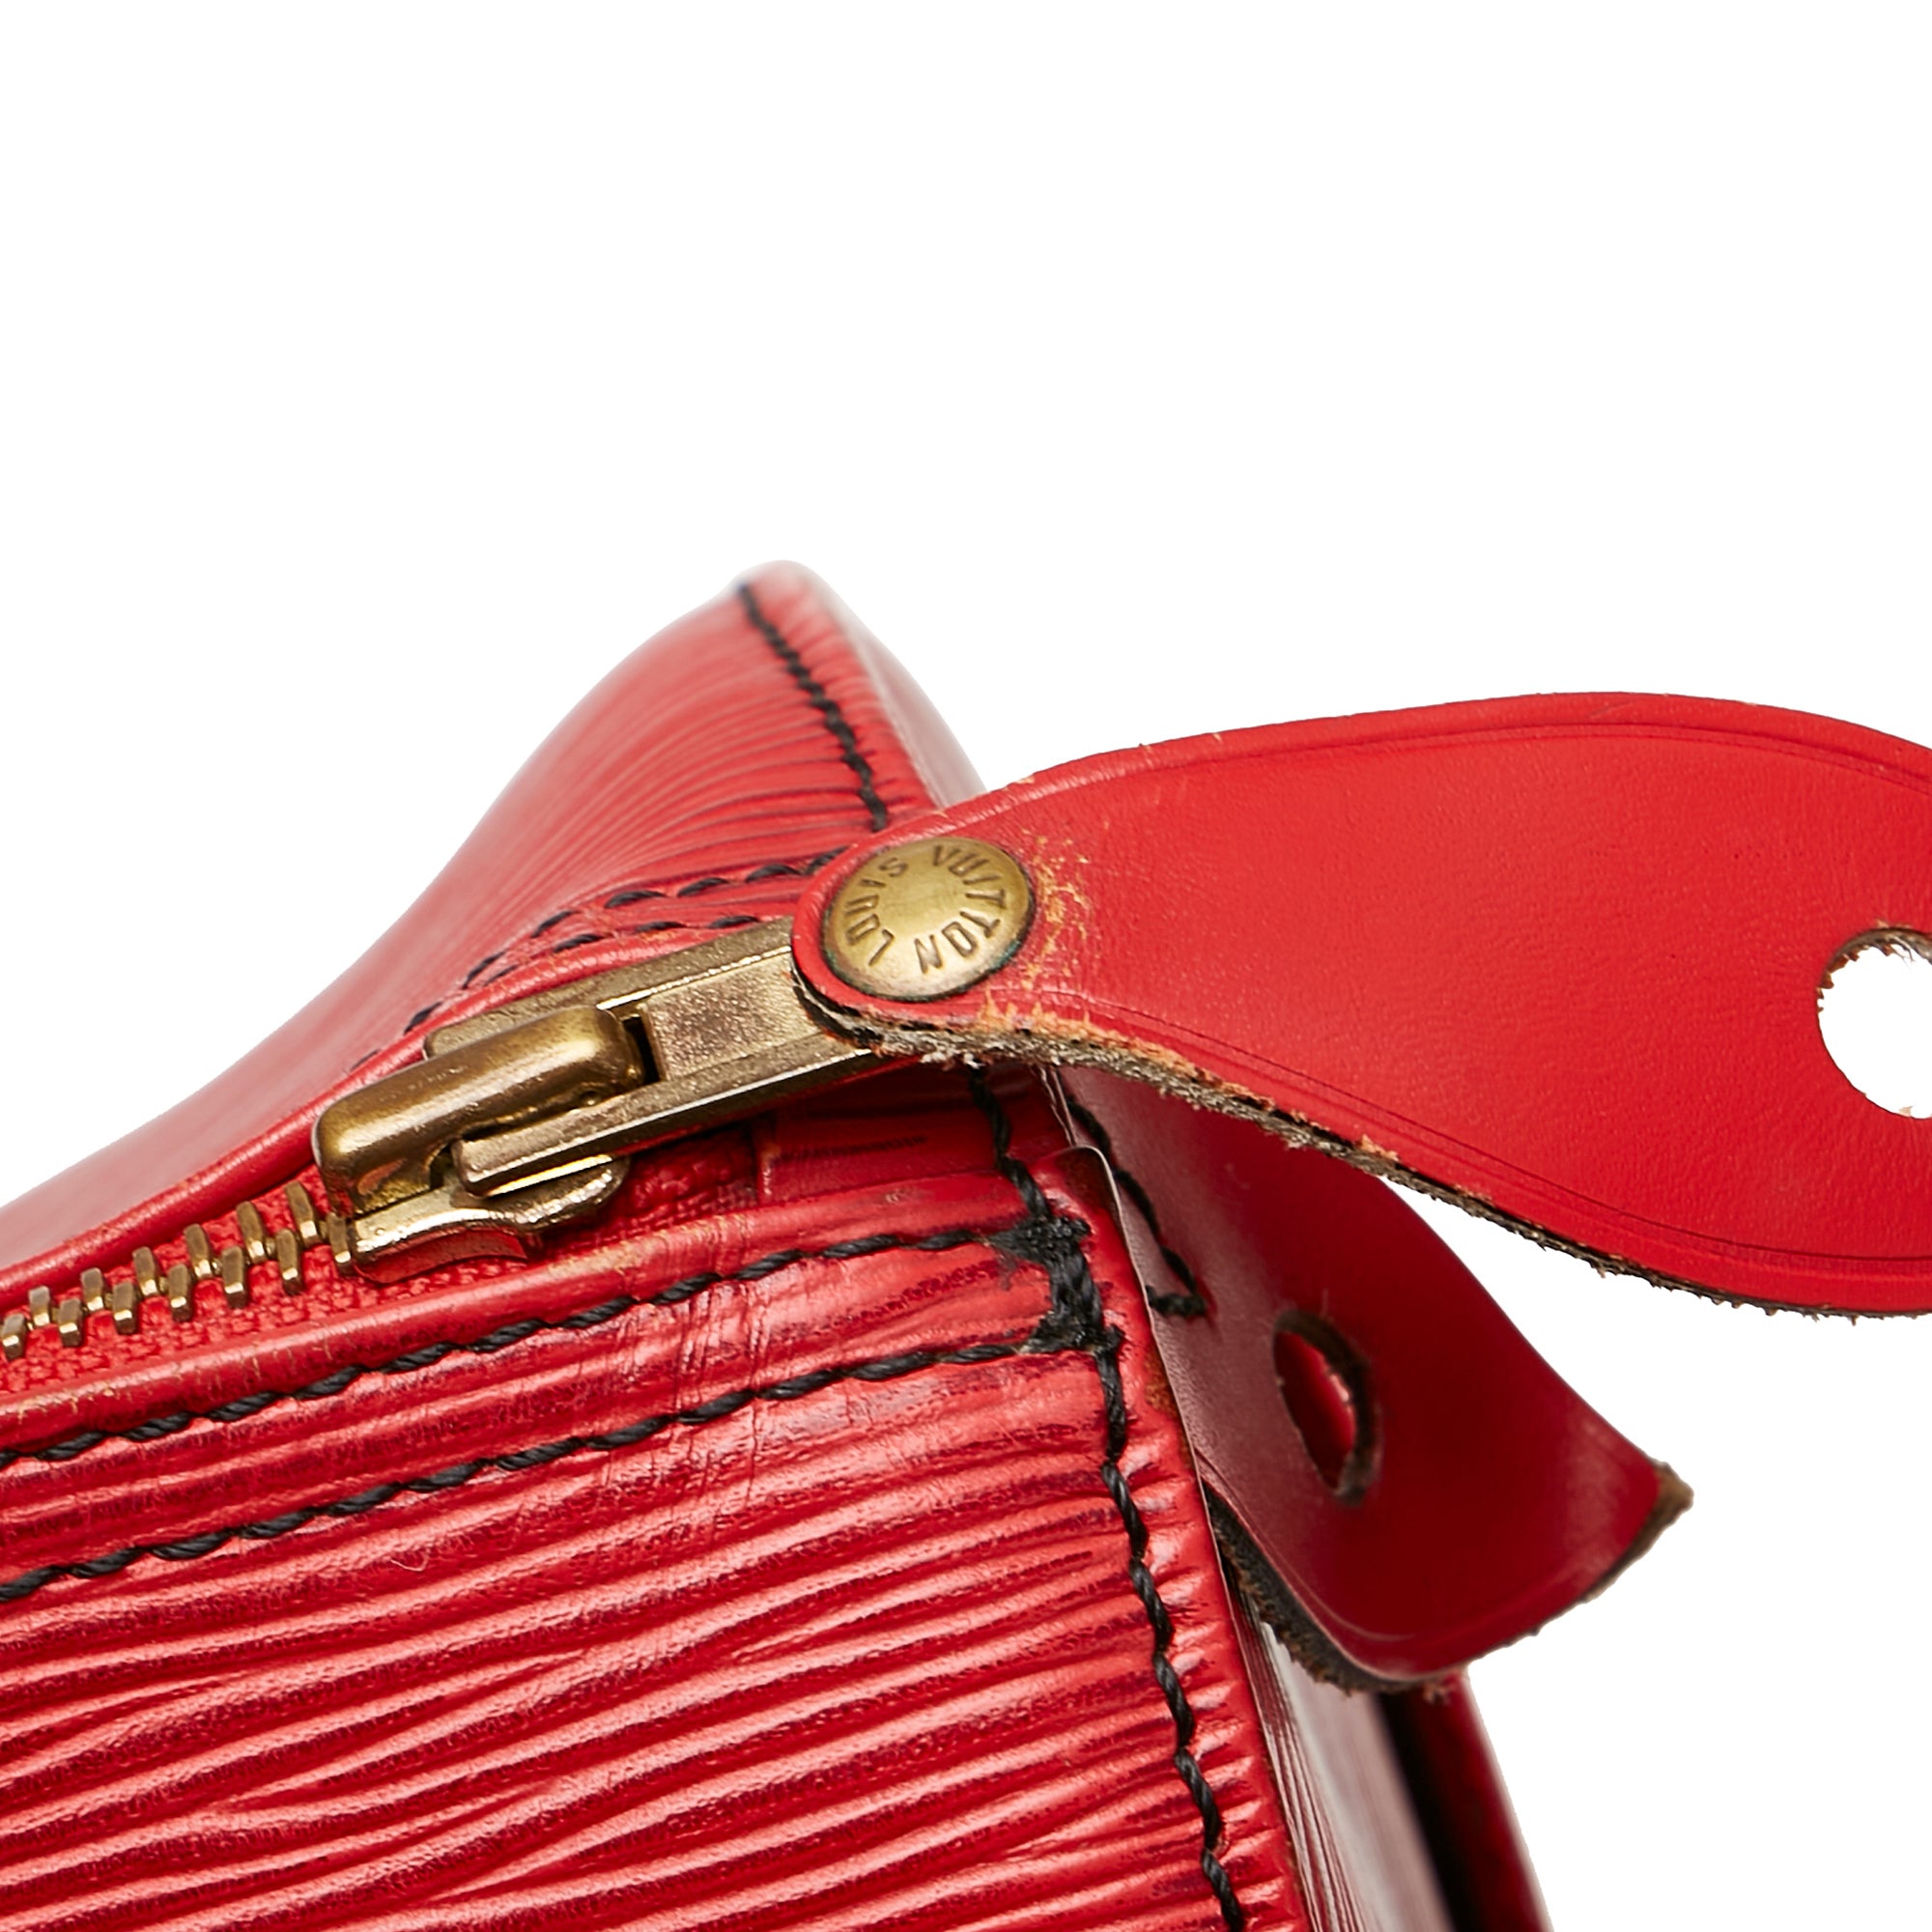 Red Louis Vuitton Epi Speedy 35 Bag